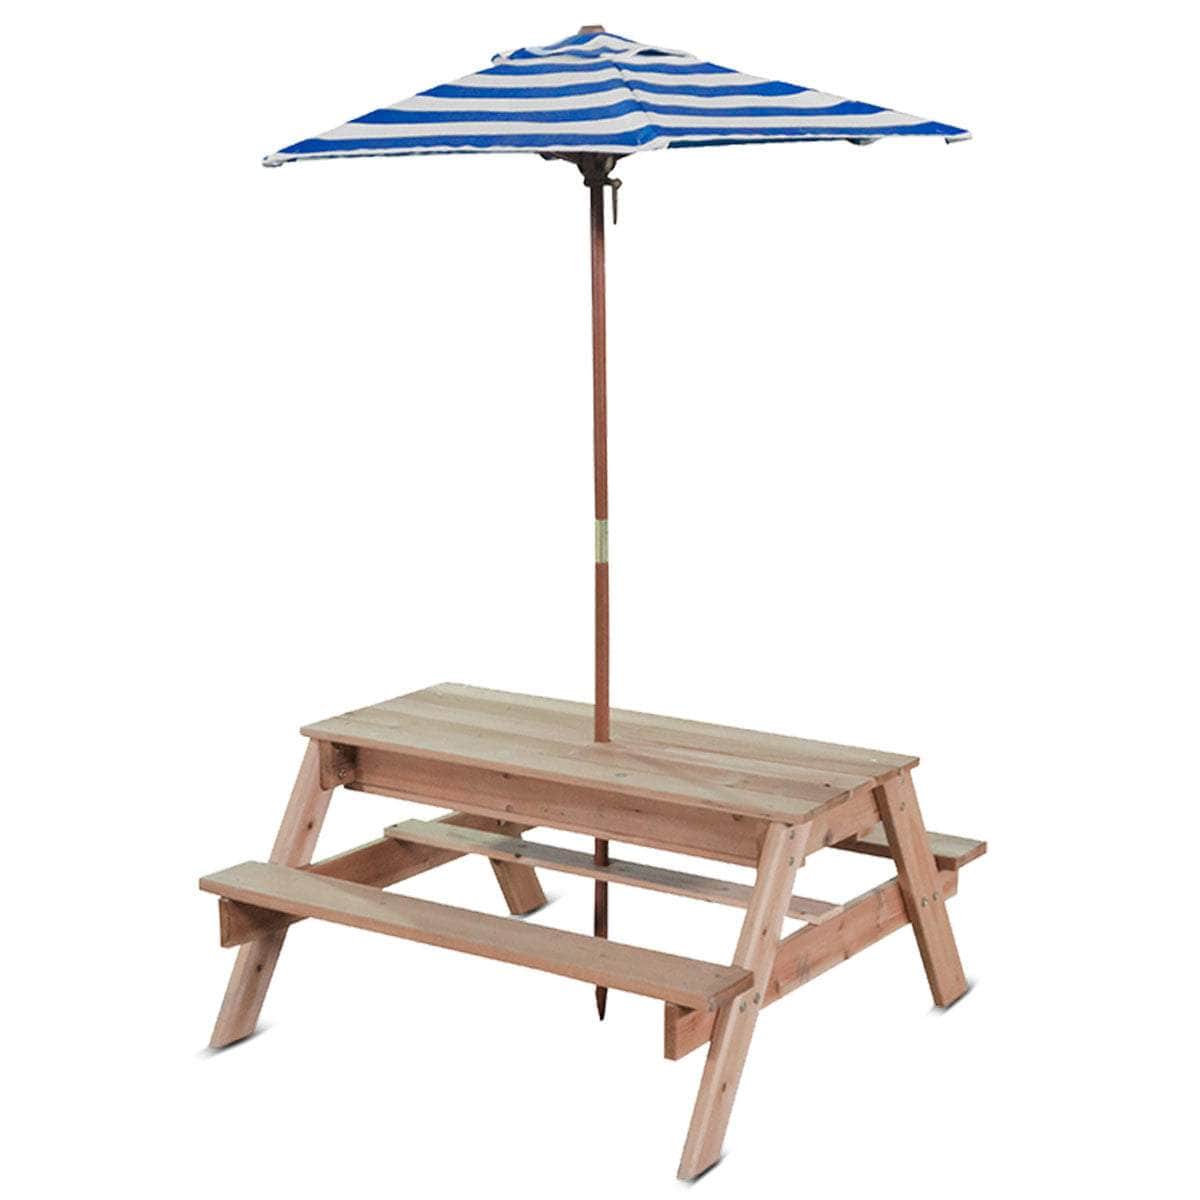 Sunrise Splash: Interactive Sand & Water Table with Umbrella